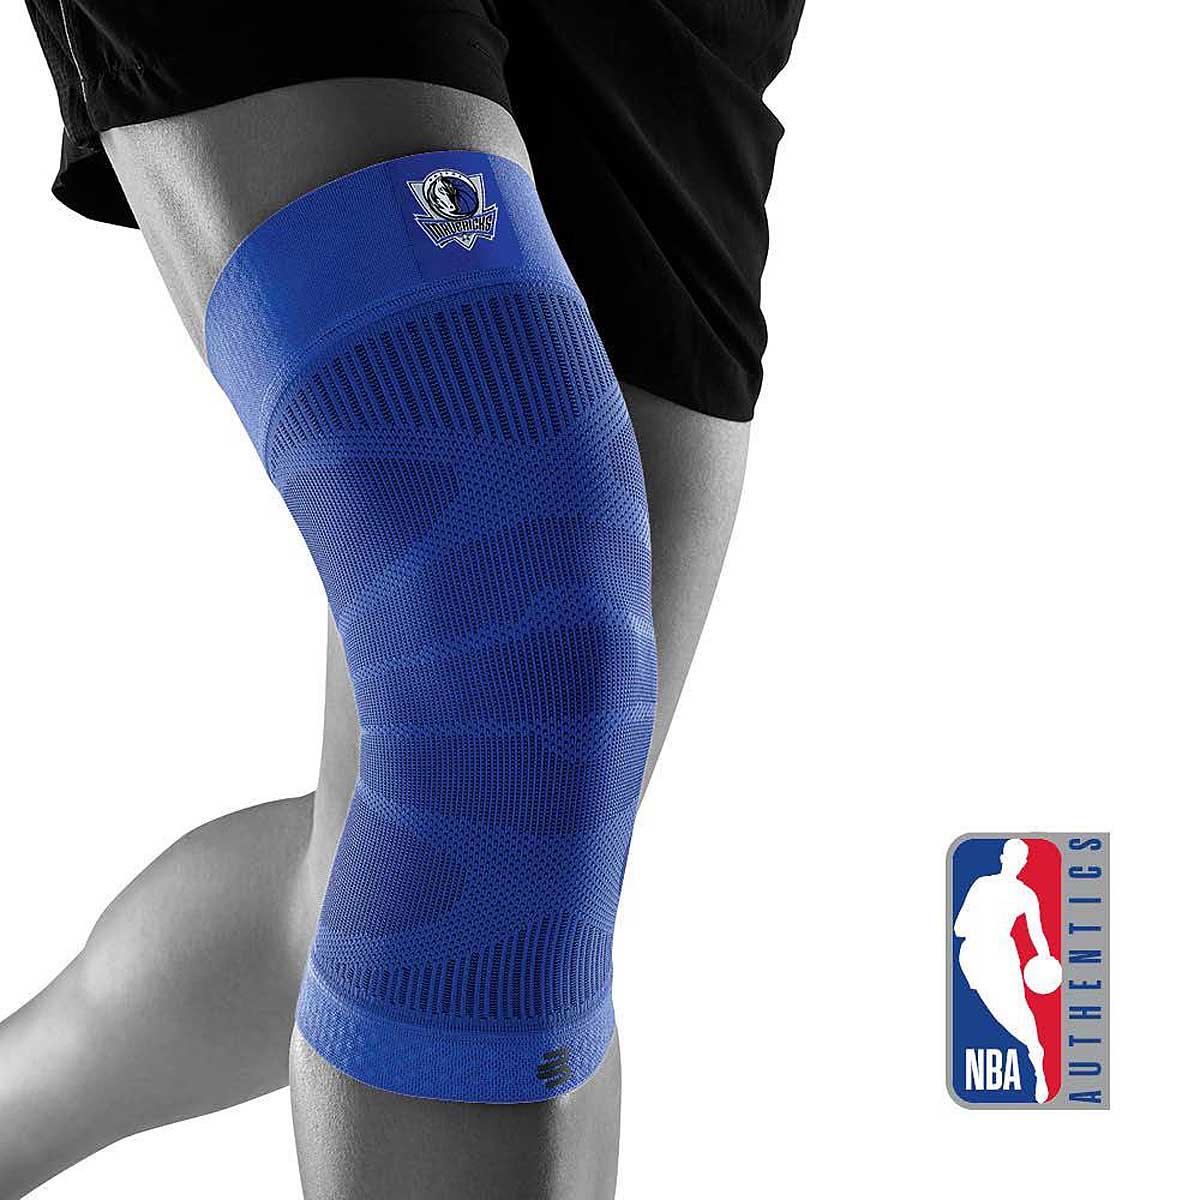 Bauerfeind Nba Sports Compression Knee Support Dalles Mavericks, Mavericks Blue